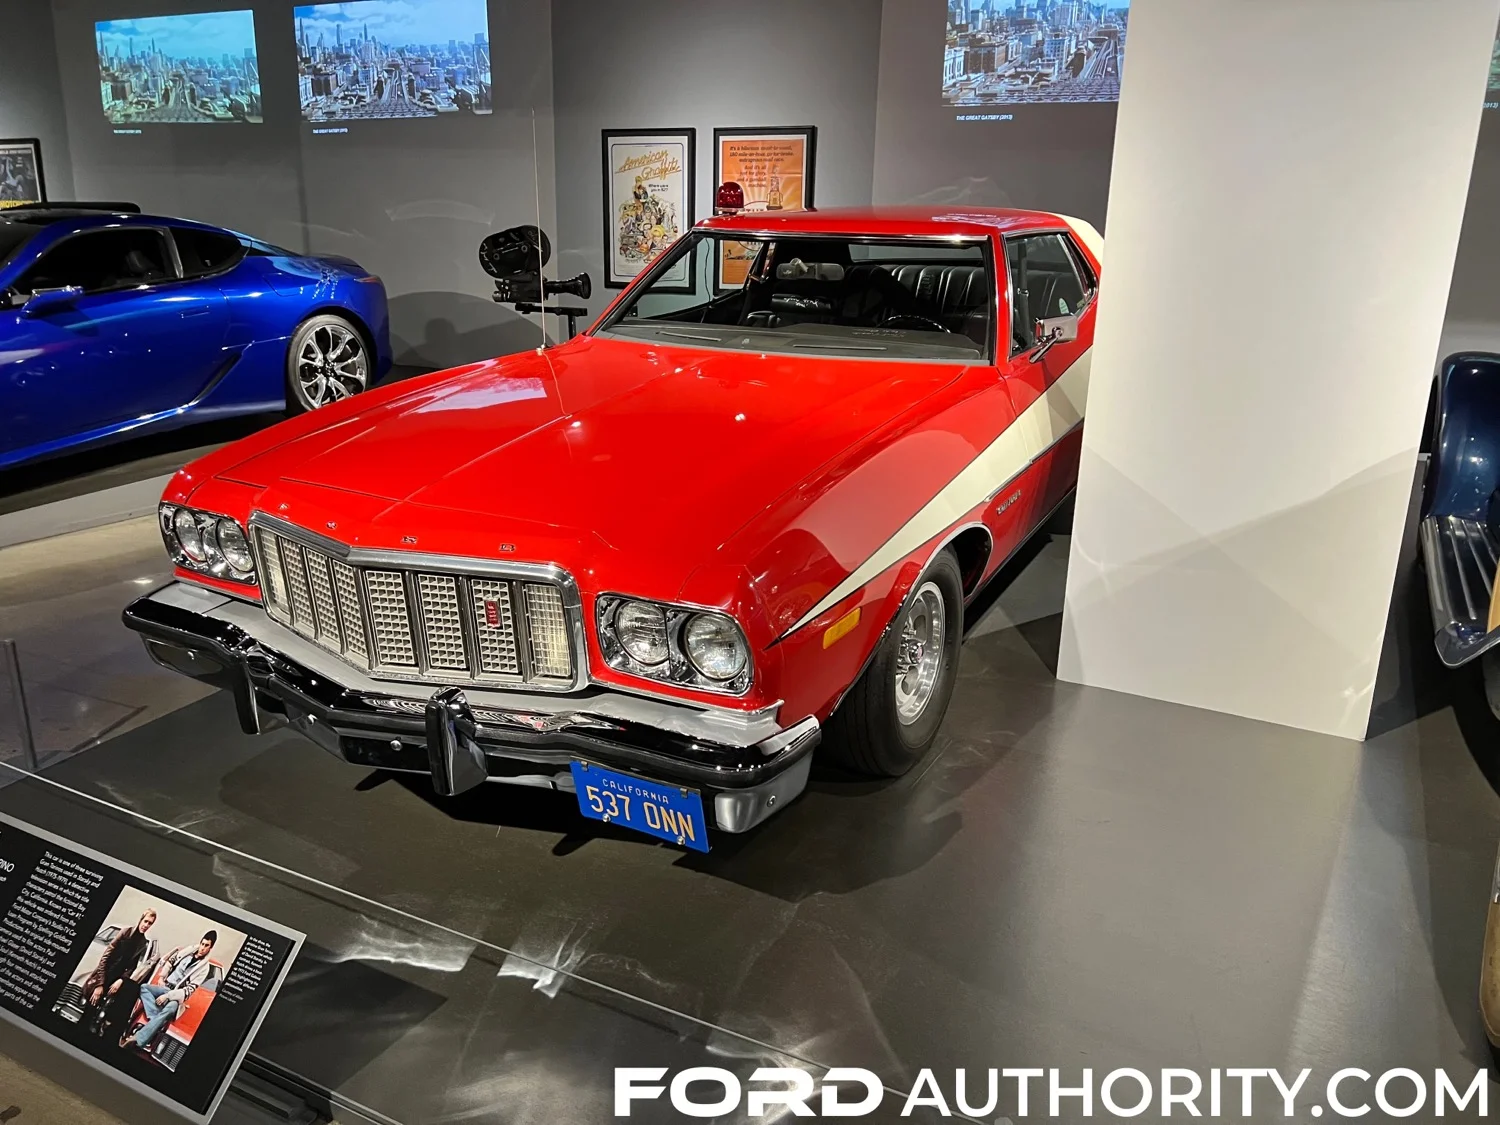 Ford Gran Torino: More than the Starsky & Hutch car